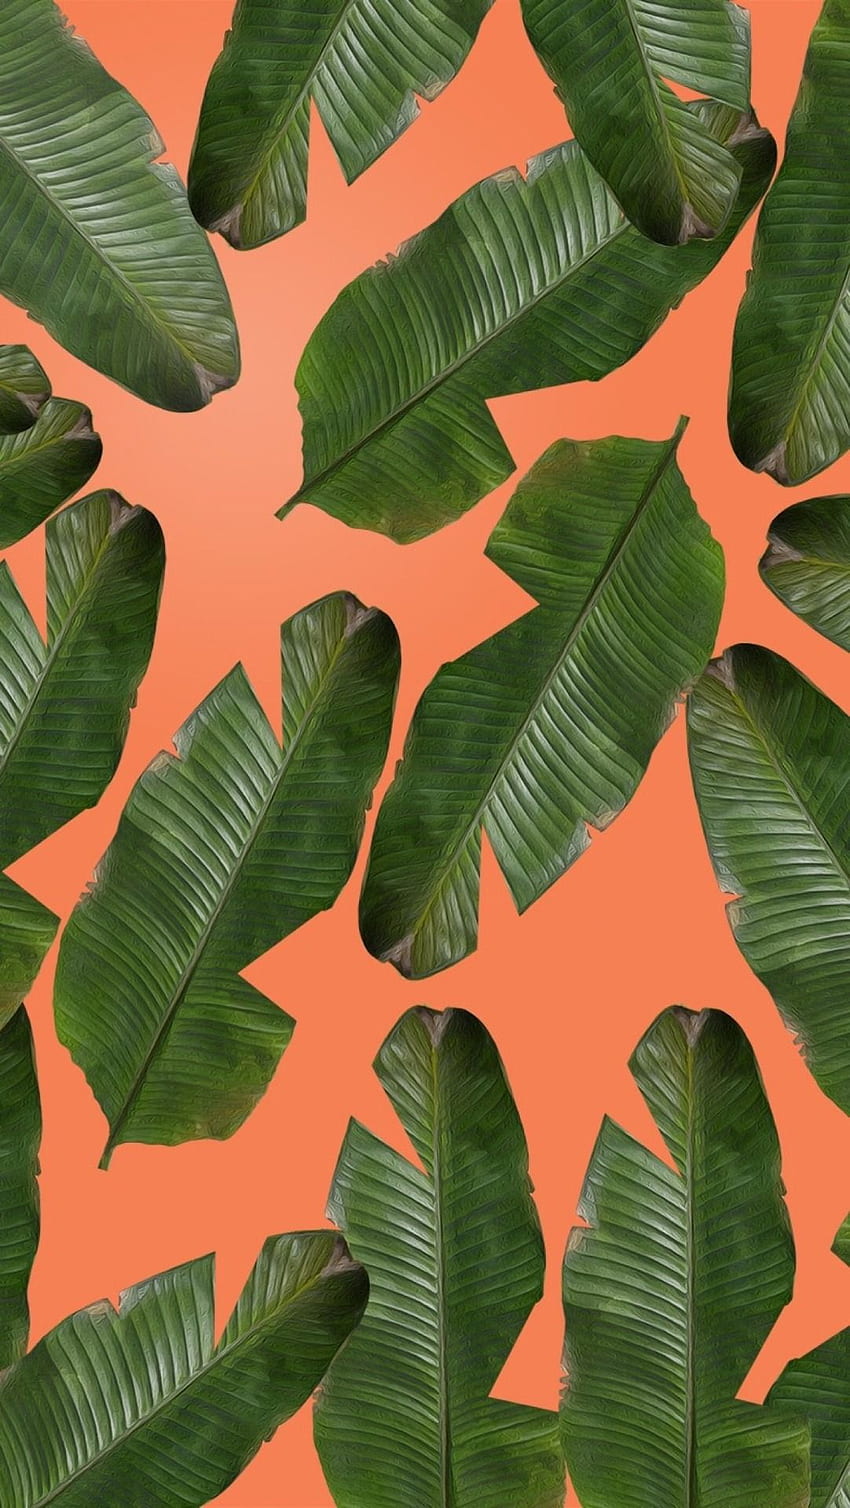 Banana Leaf Wallpaper Images  Free Download on Freepik